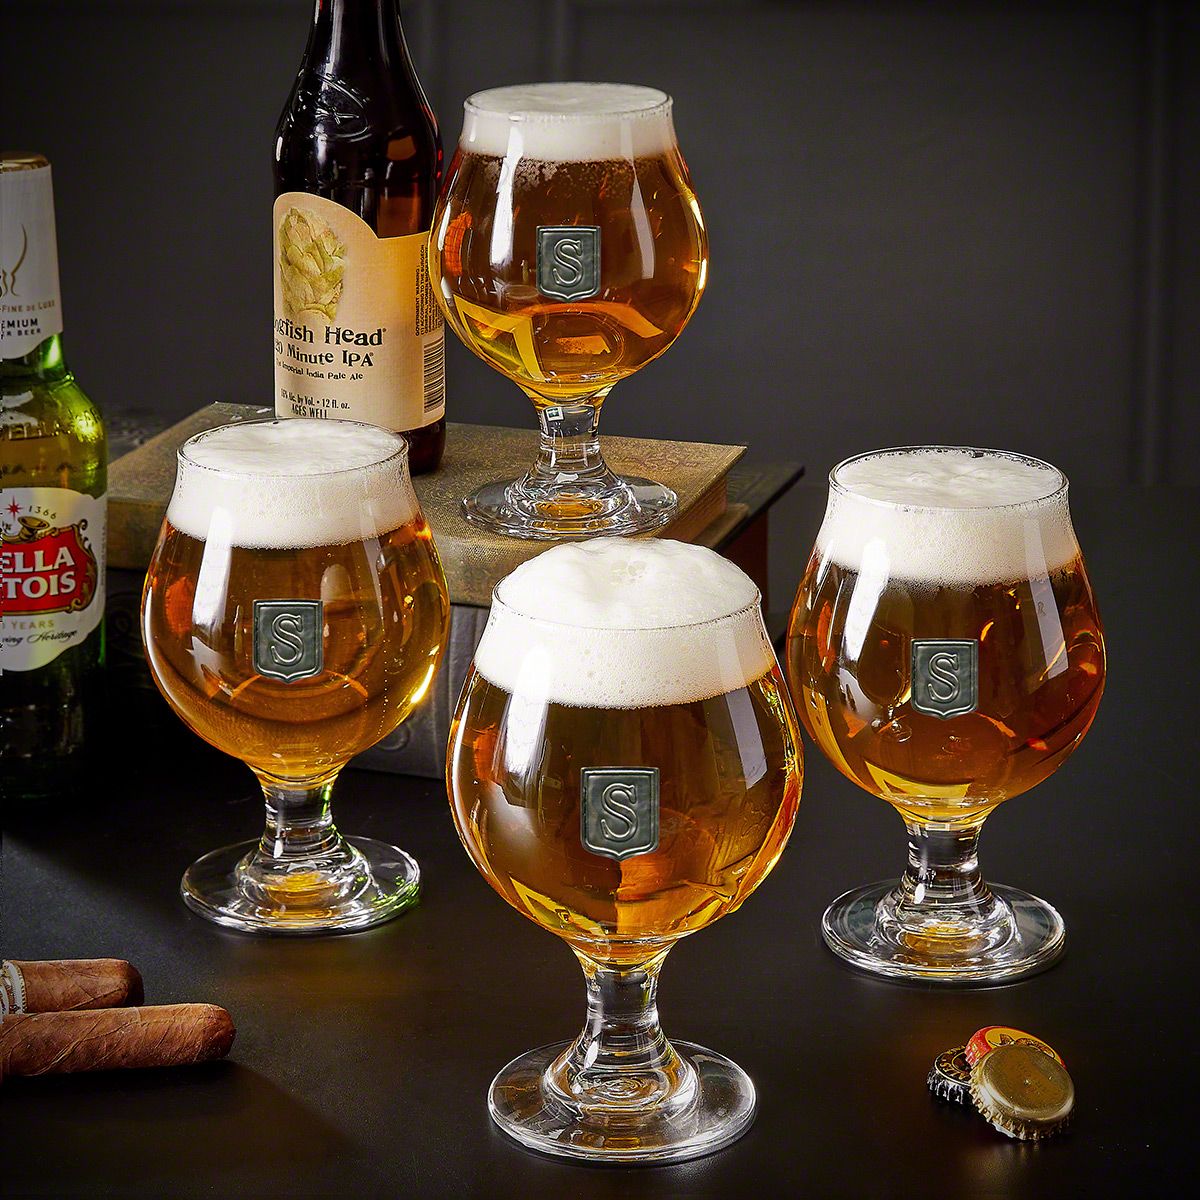 https://images.homewetbar.com/media/catalog/product/r/e/regal-crested-beer-snifter-glasses_-set-of-4-p_4135.jpg?store=default&image-type=image